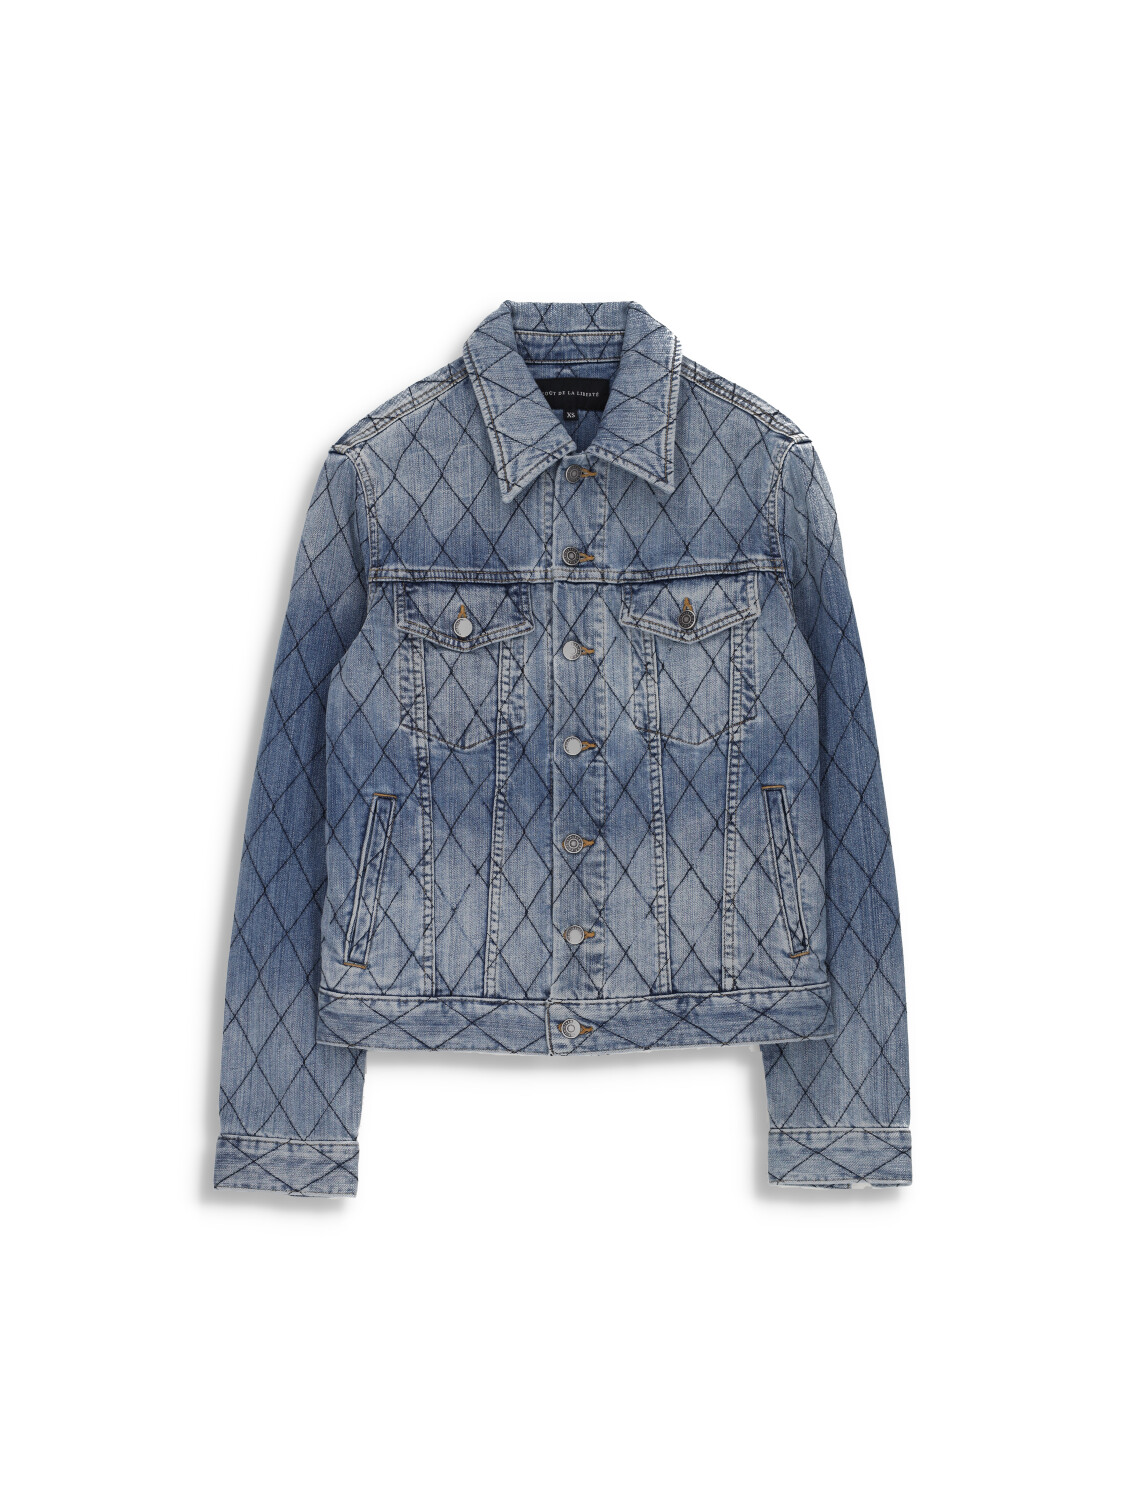 Johnny - denim jacket with diamond pattern and light wash